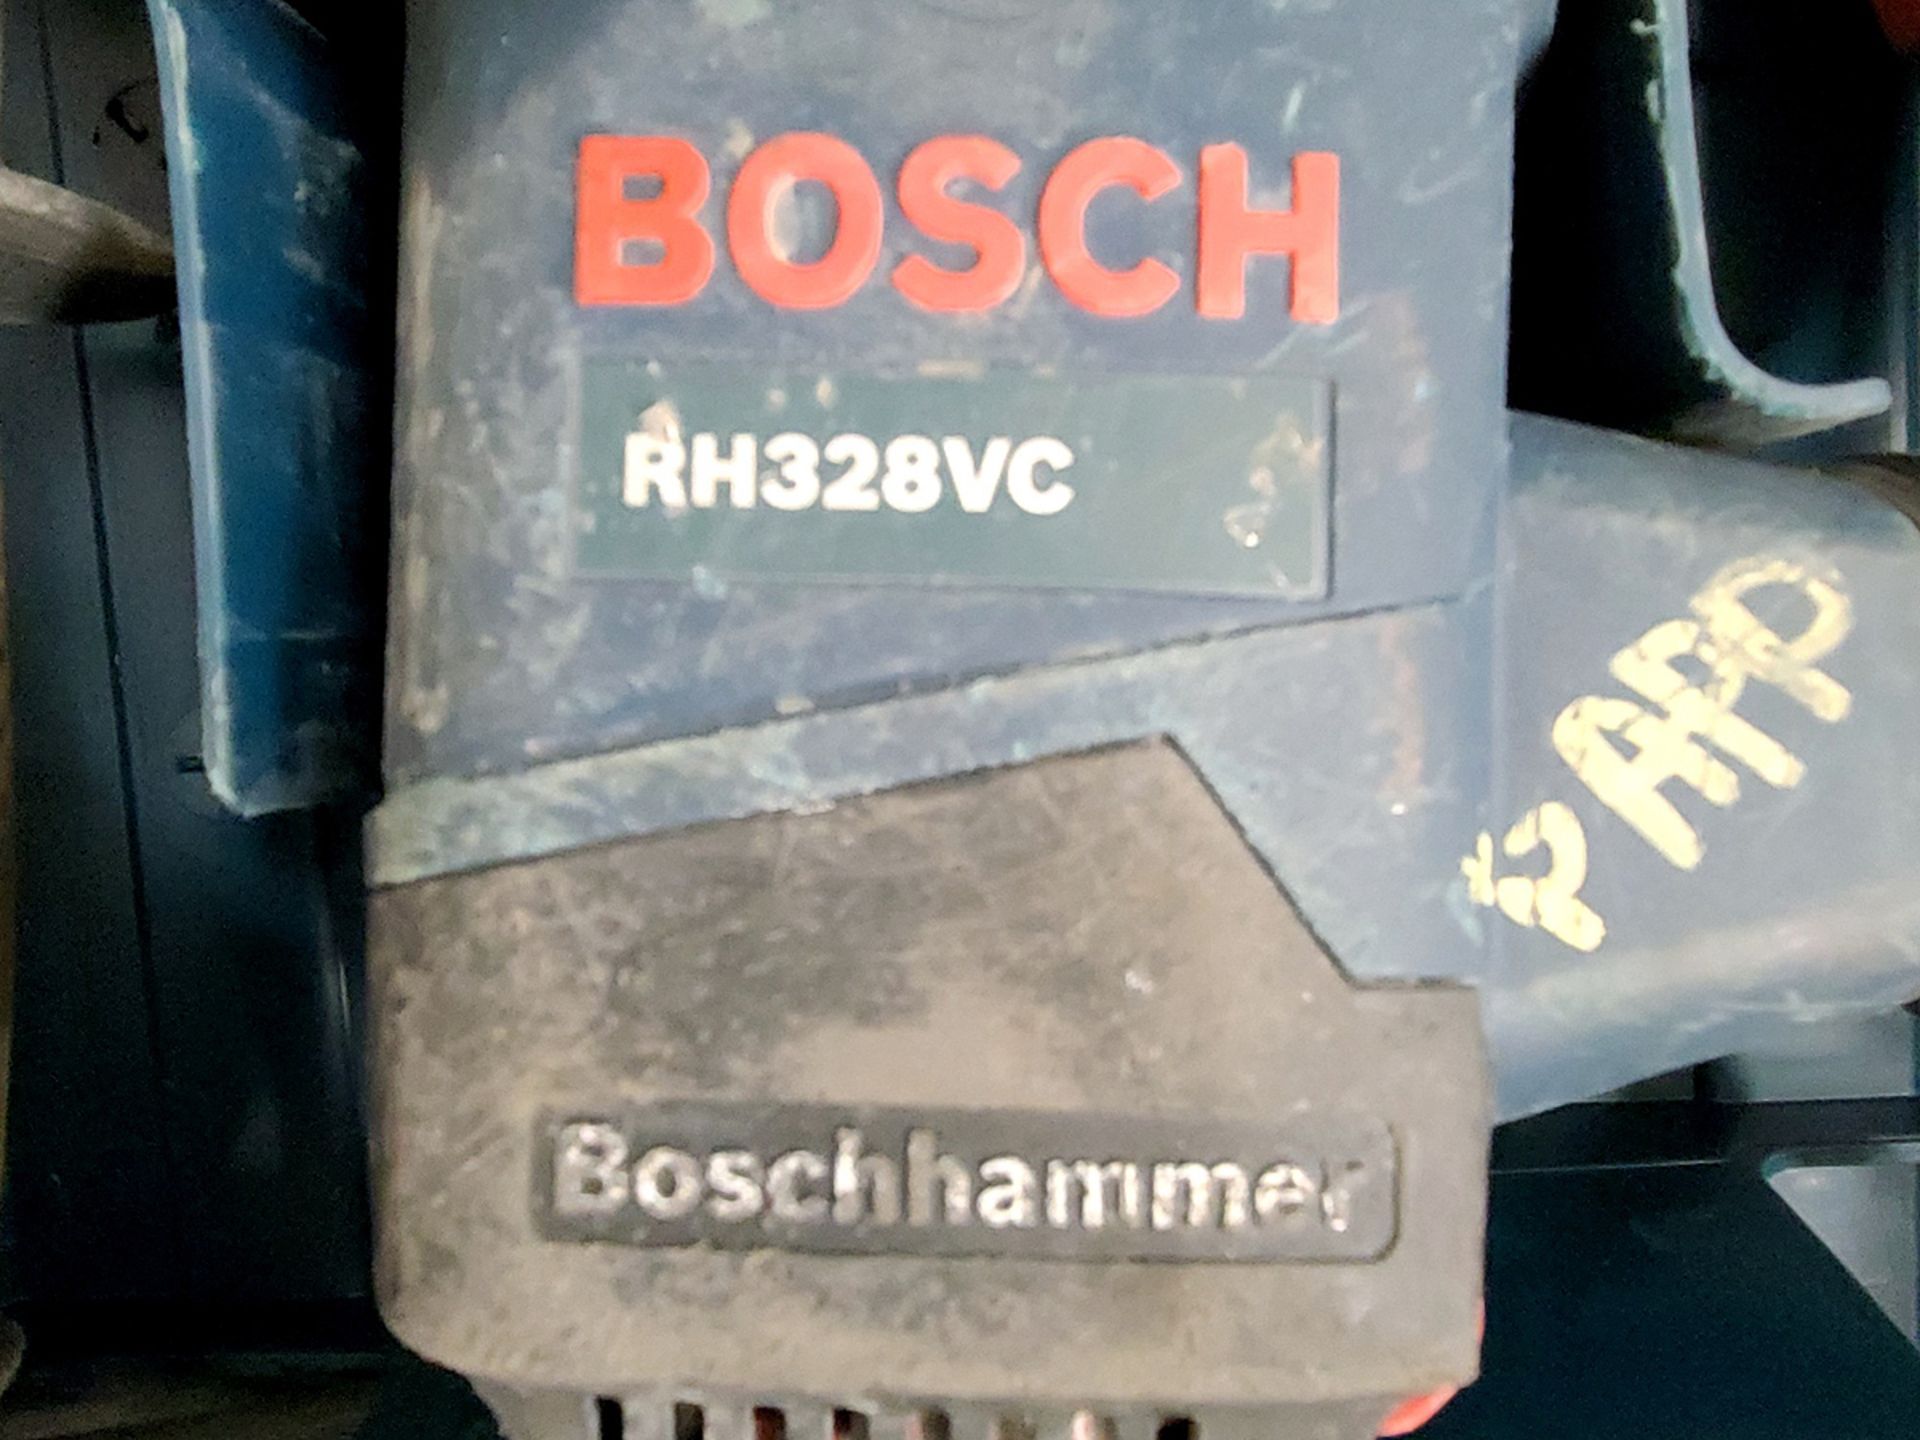 [Each] Bosch Boschhammer RH328VC Rotary Hammer Drill w/Case - Image 2 of 3